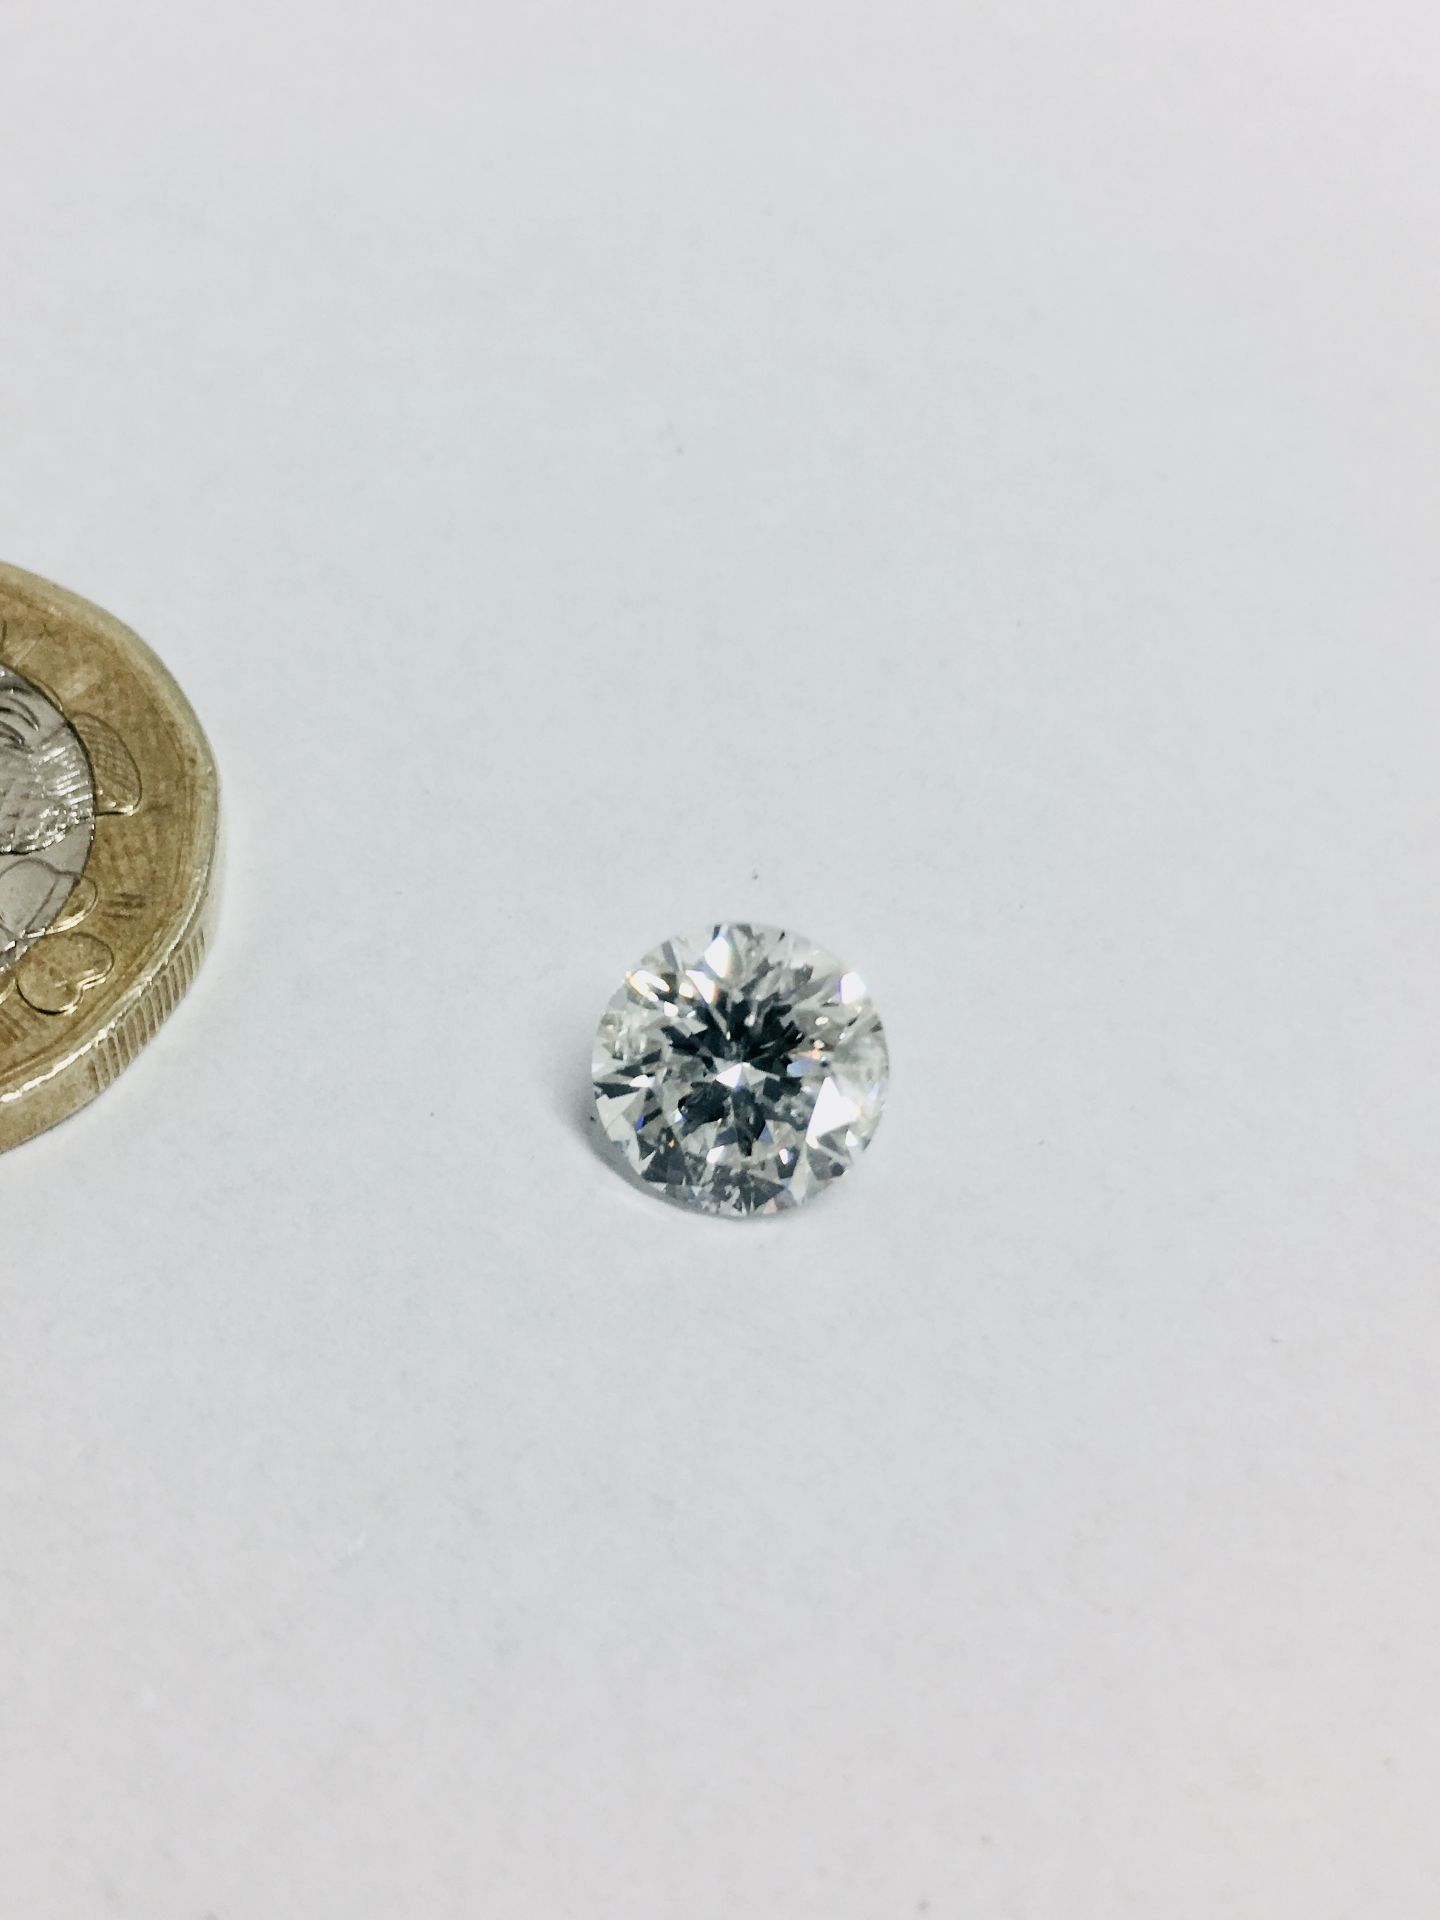 1.78ct Round brilliant cut diamond,si2 clarity N colour GIA certification. Appraisal 15000